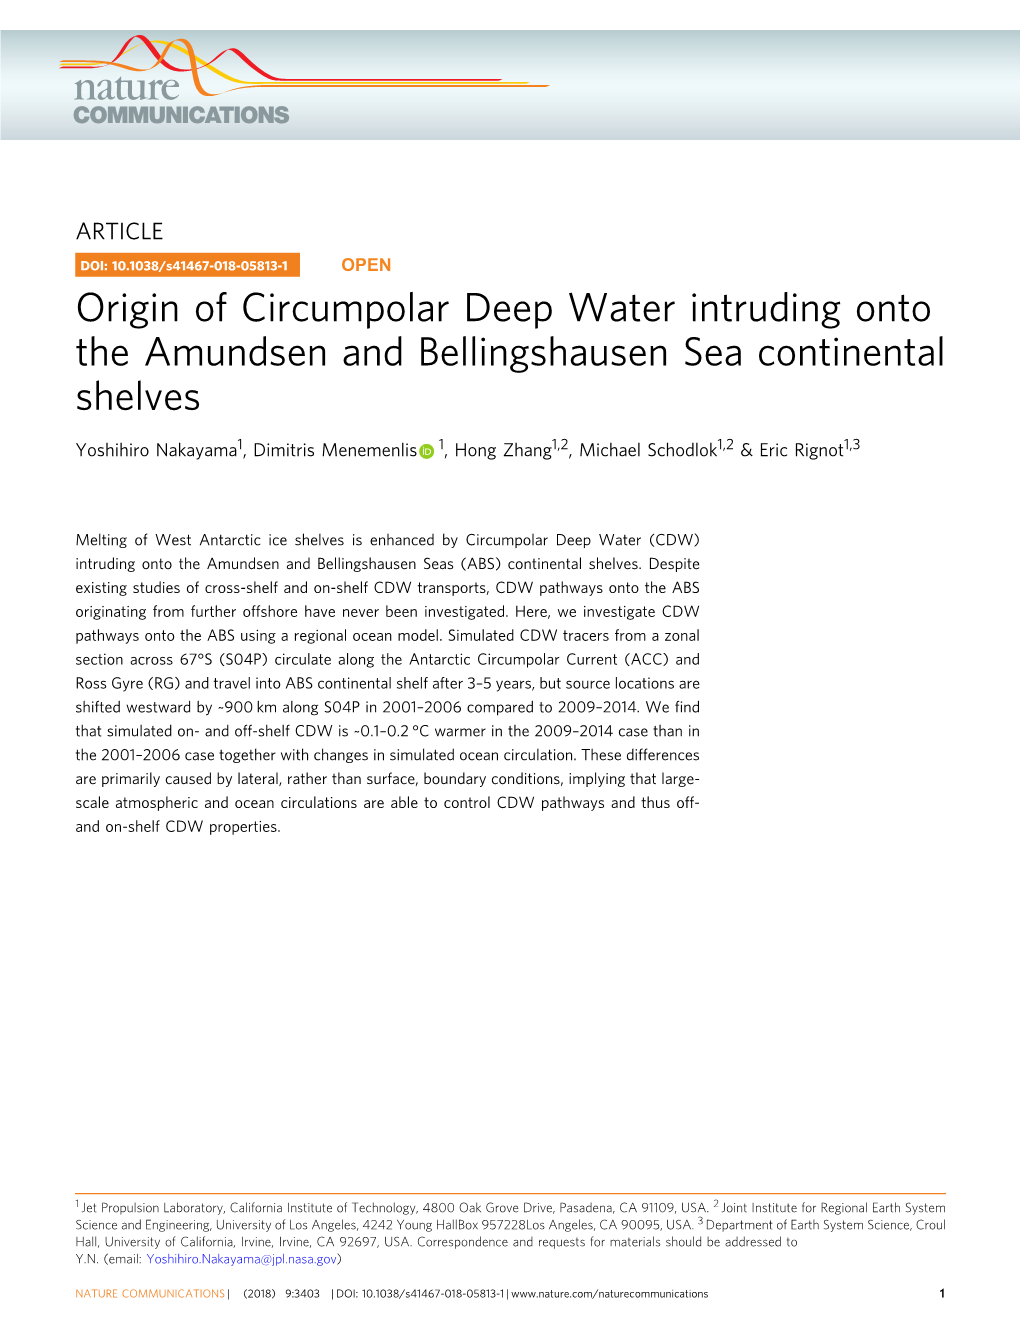 Origin of Circumpolar Deep Water Intruding Onto the Amundsen and Bellingshausen Sea Continental Shelves